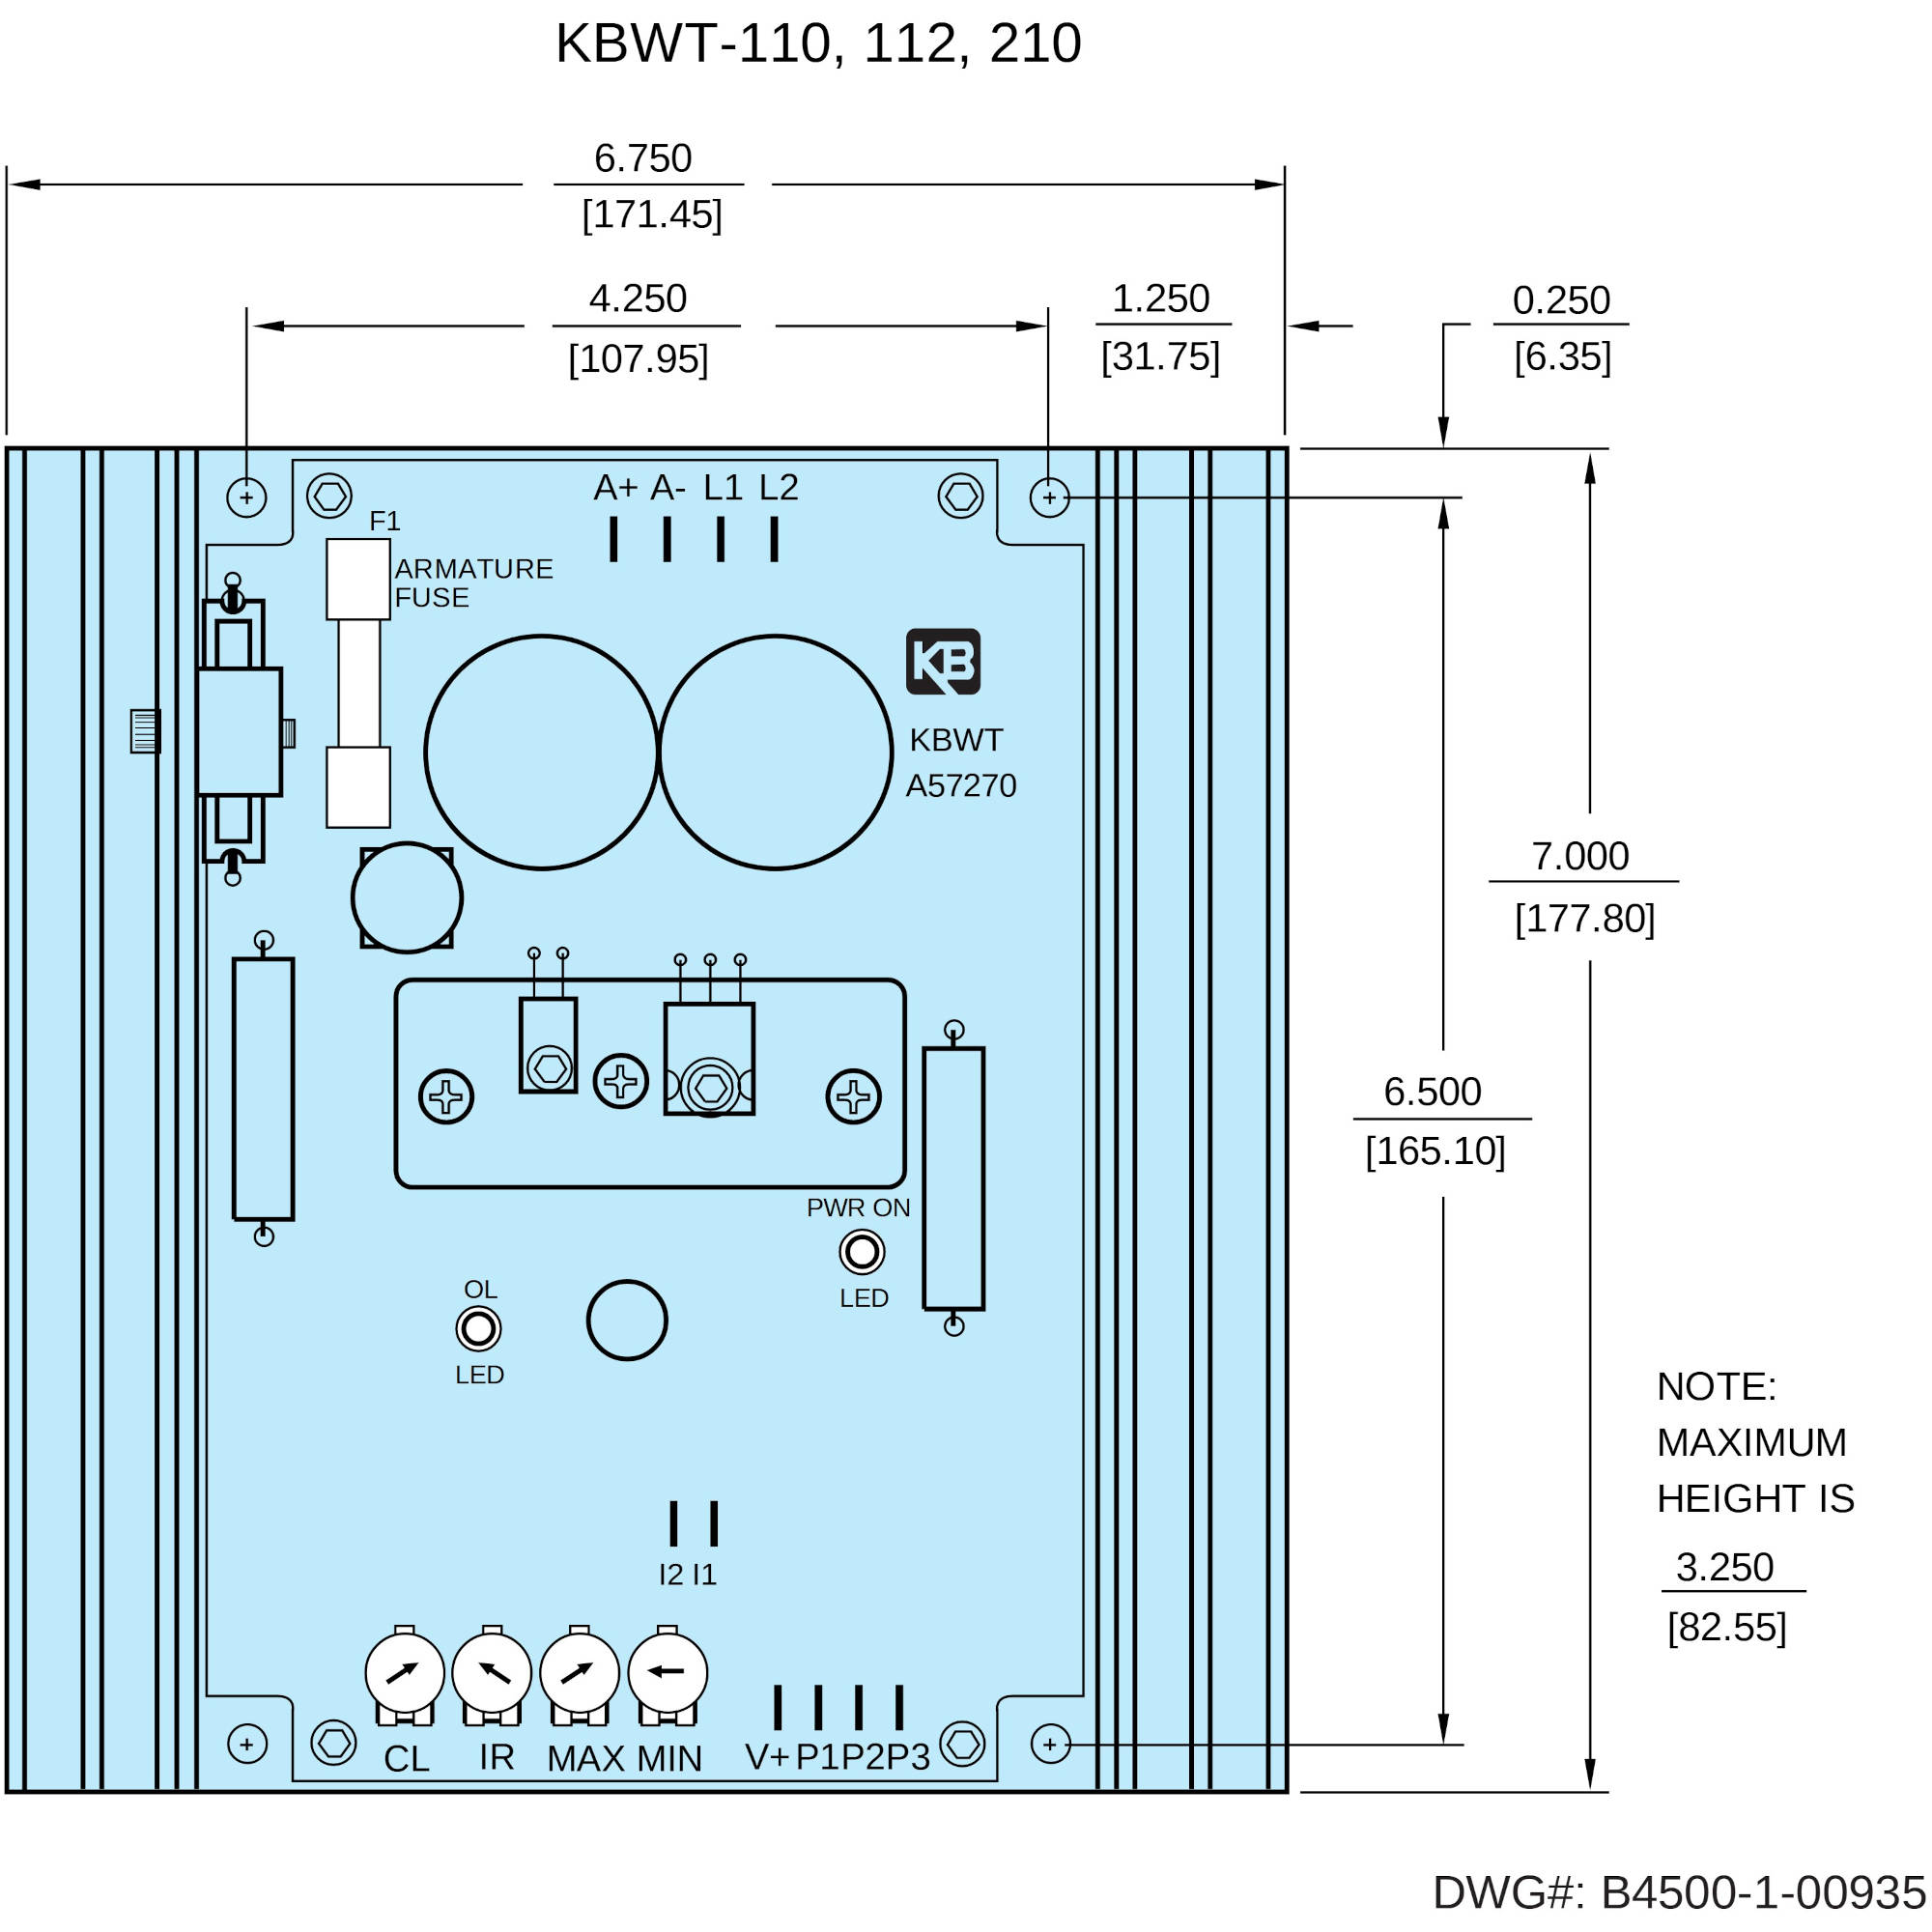 KBWT-112 KB Electronics Pulse Width Modulated (PWM) Whisper-Drive, 8612 8